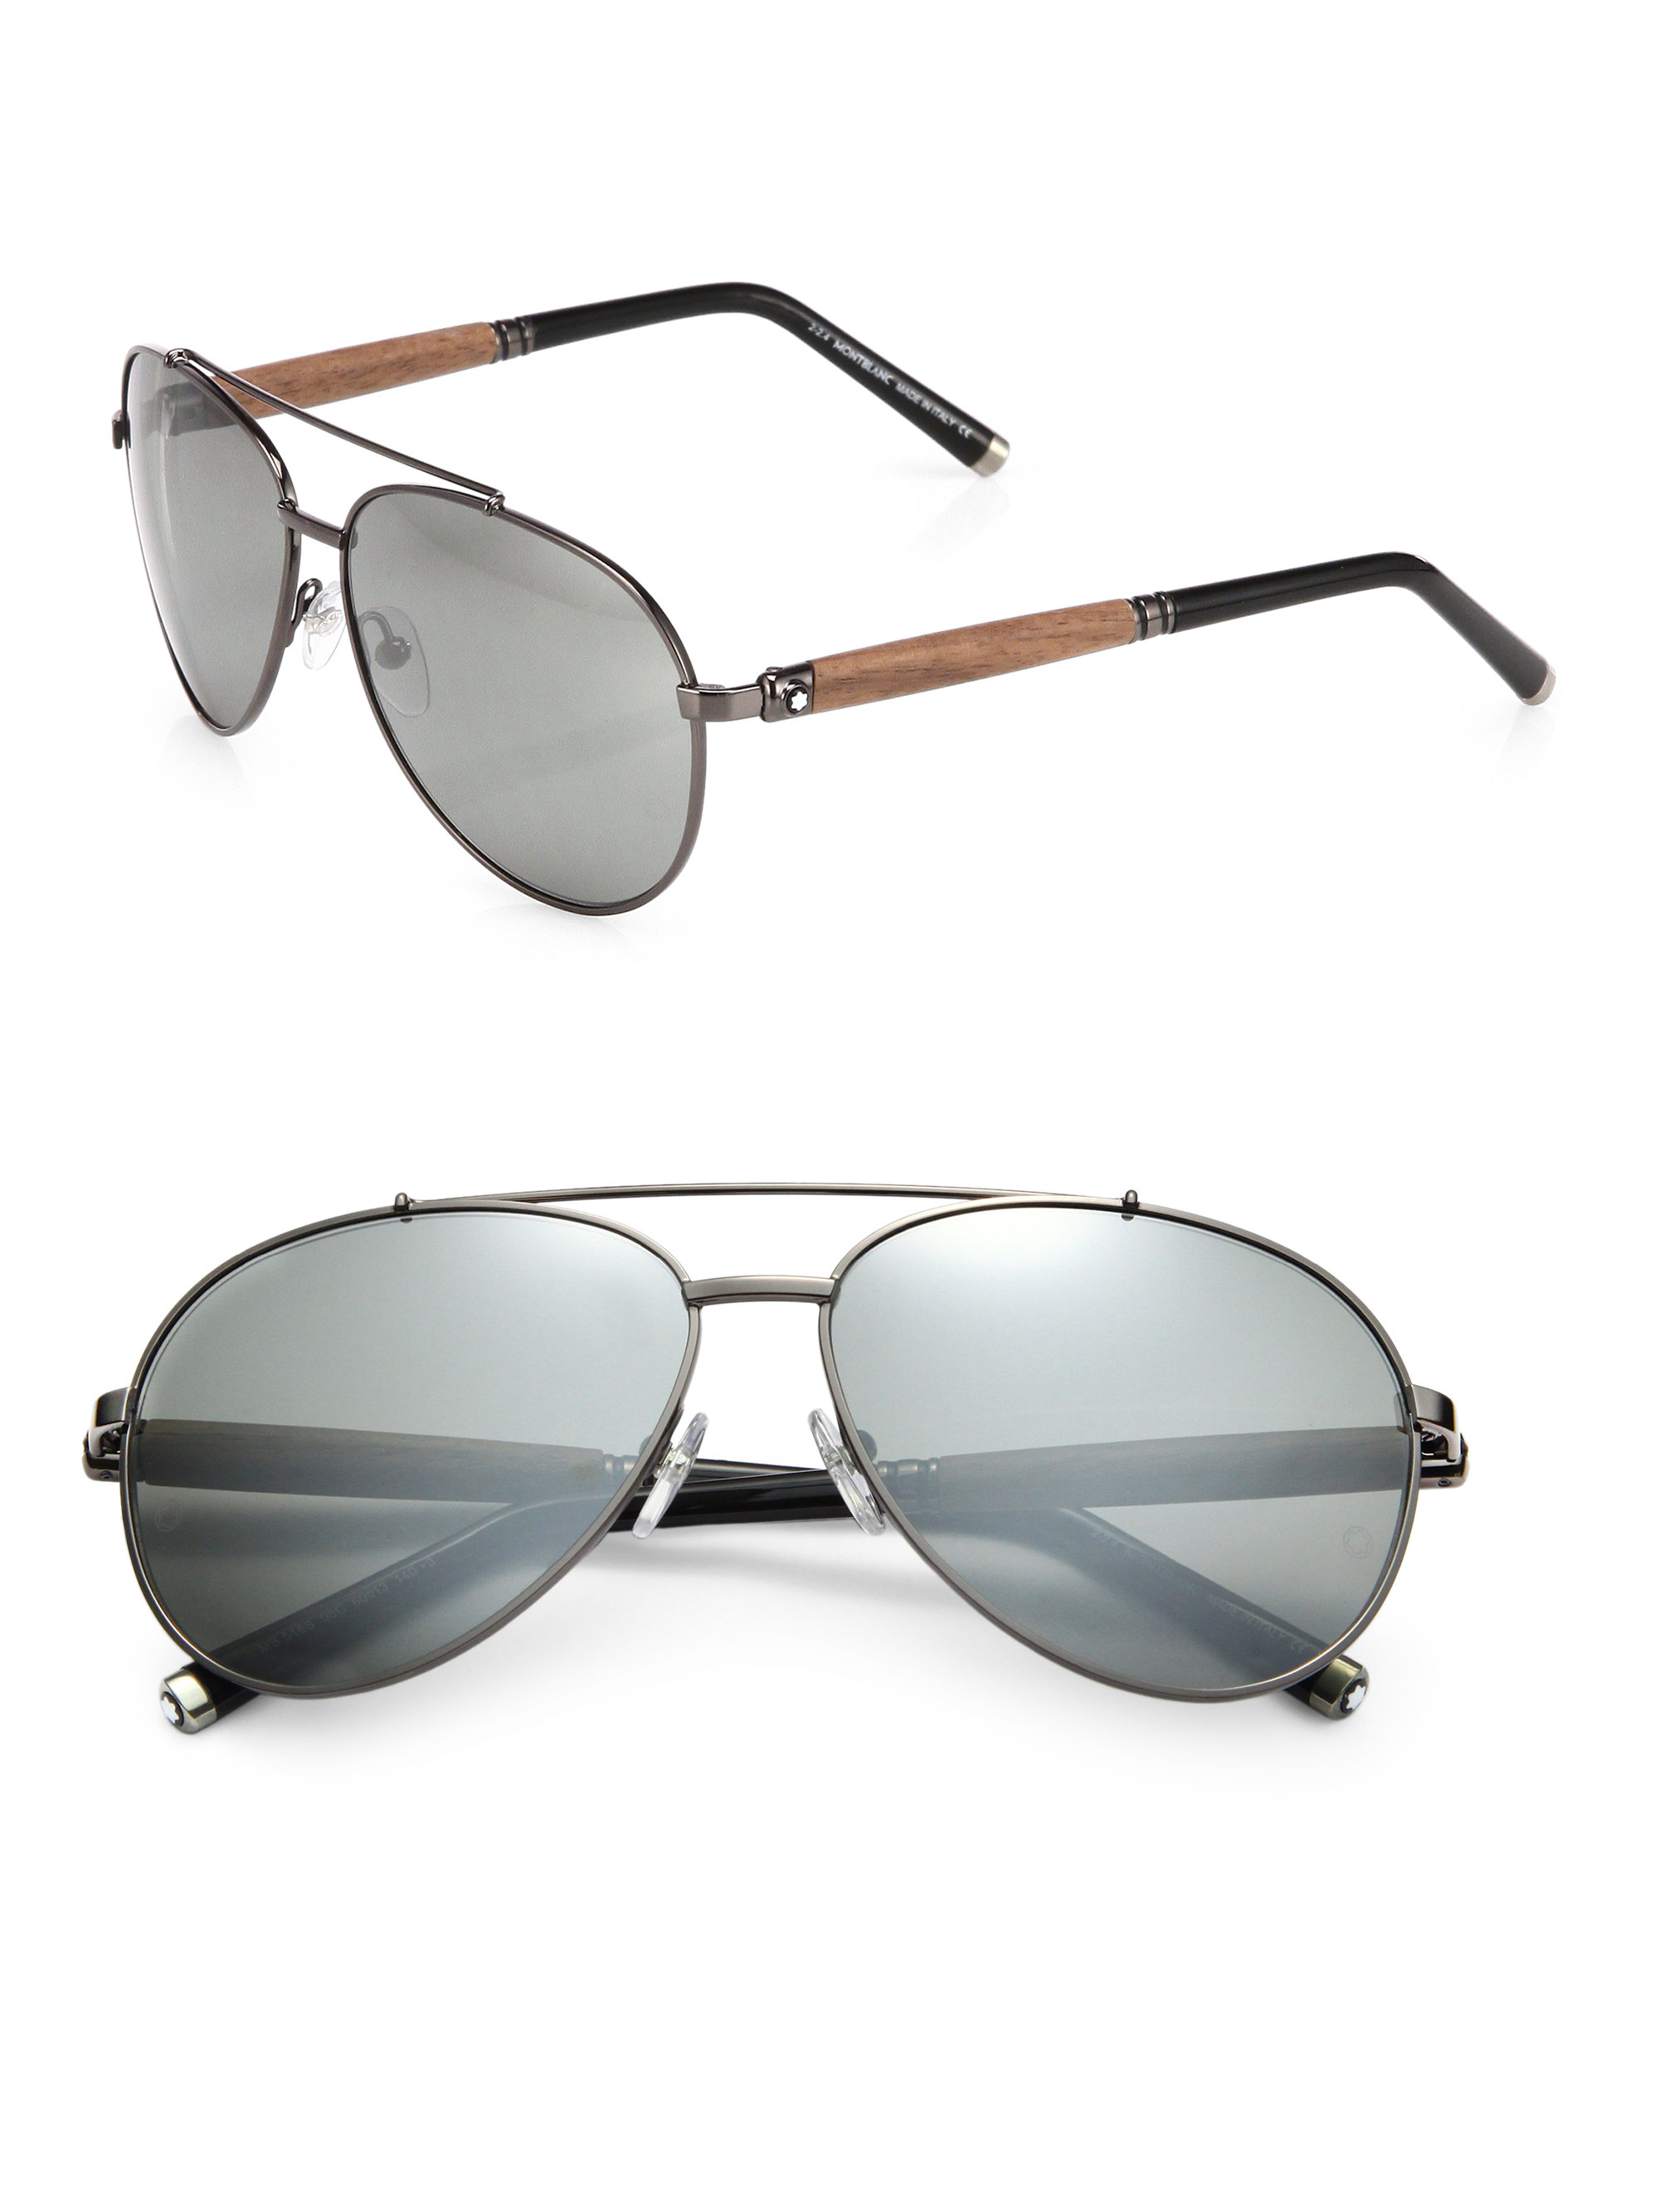 Lyst - Montblanc 60mm Metal Aviator Sunglasses in Metallic for Men